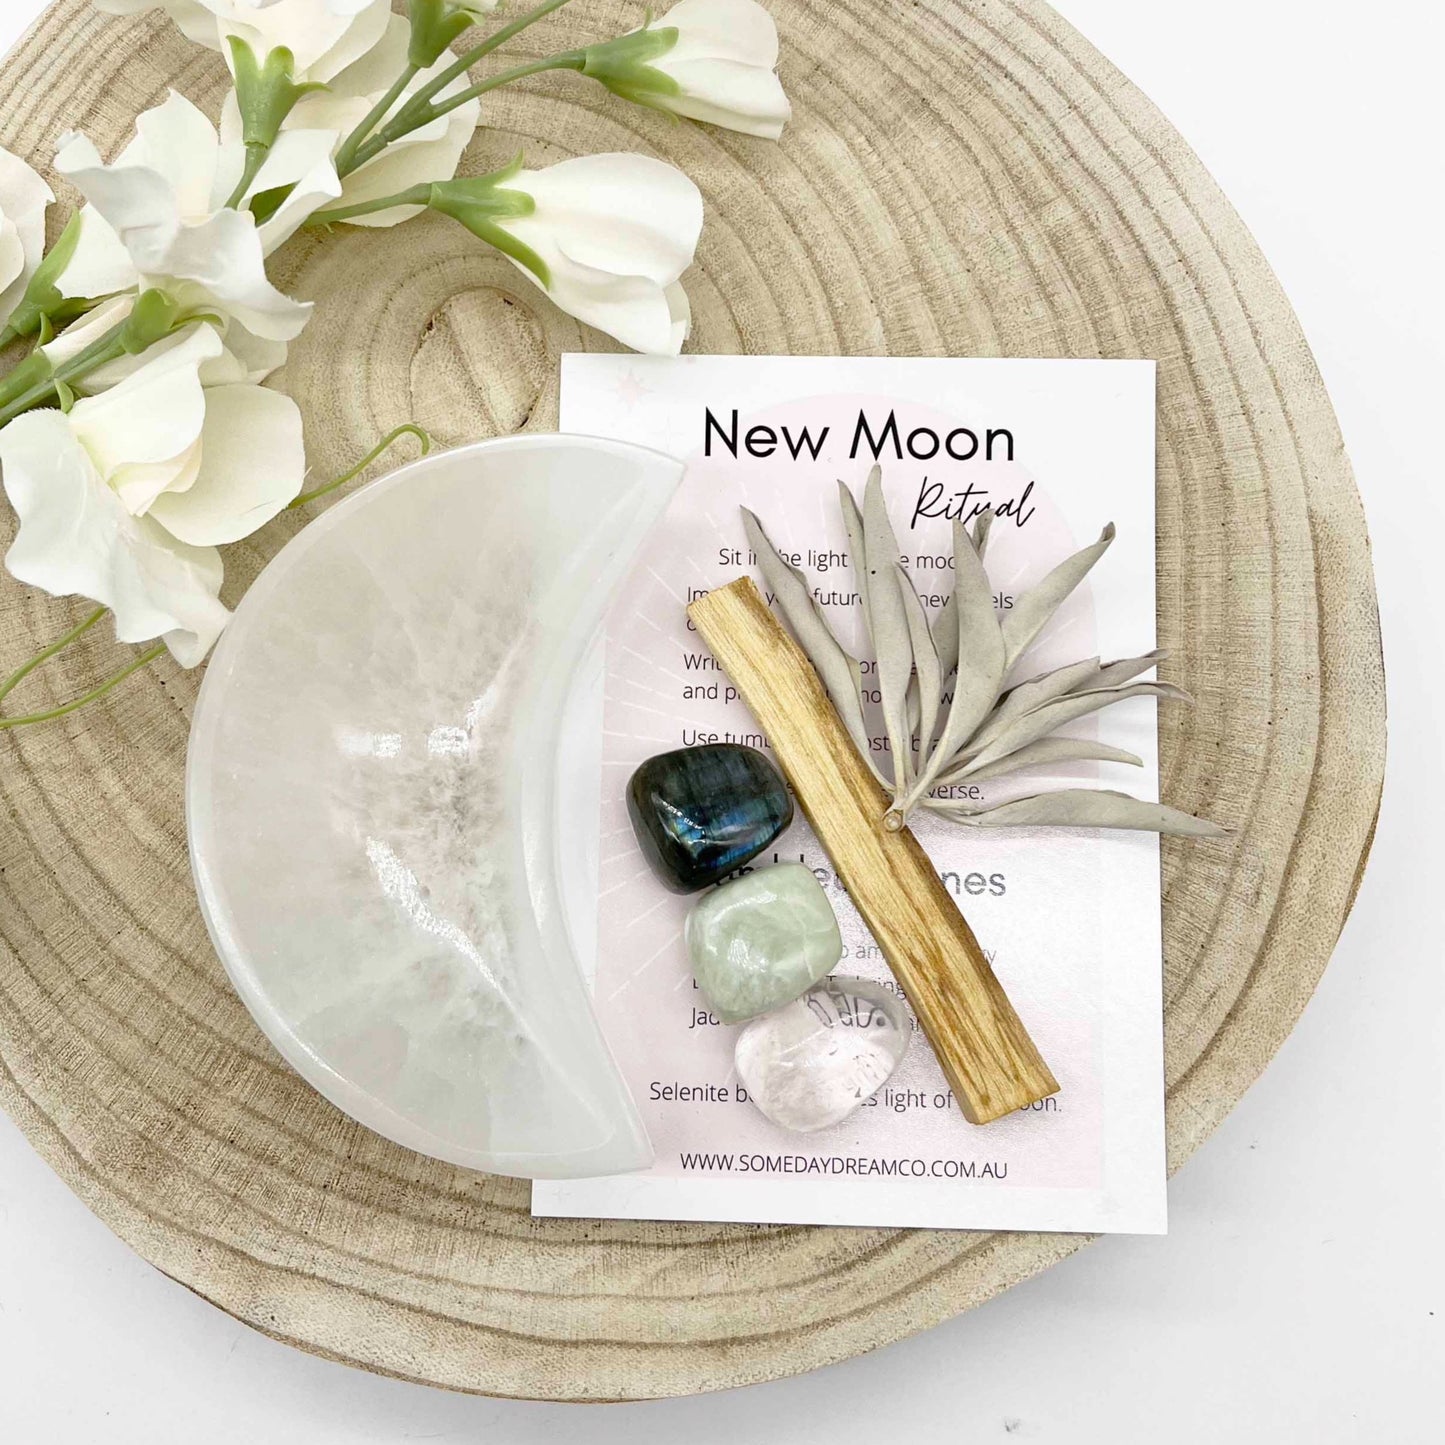 New moon ritual crystal kit